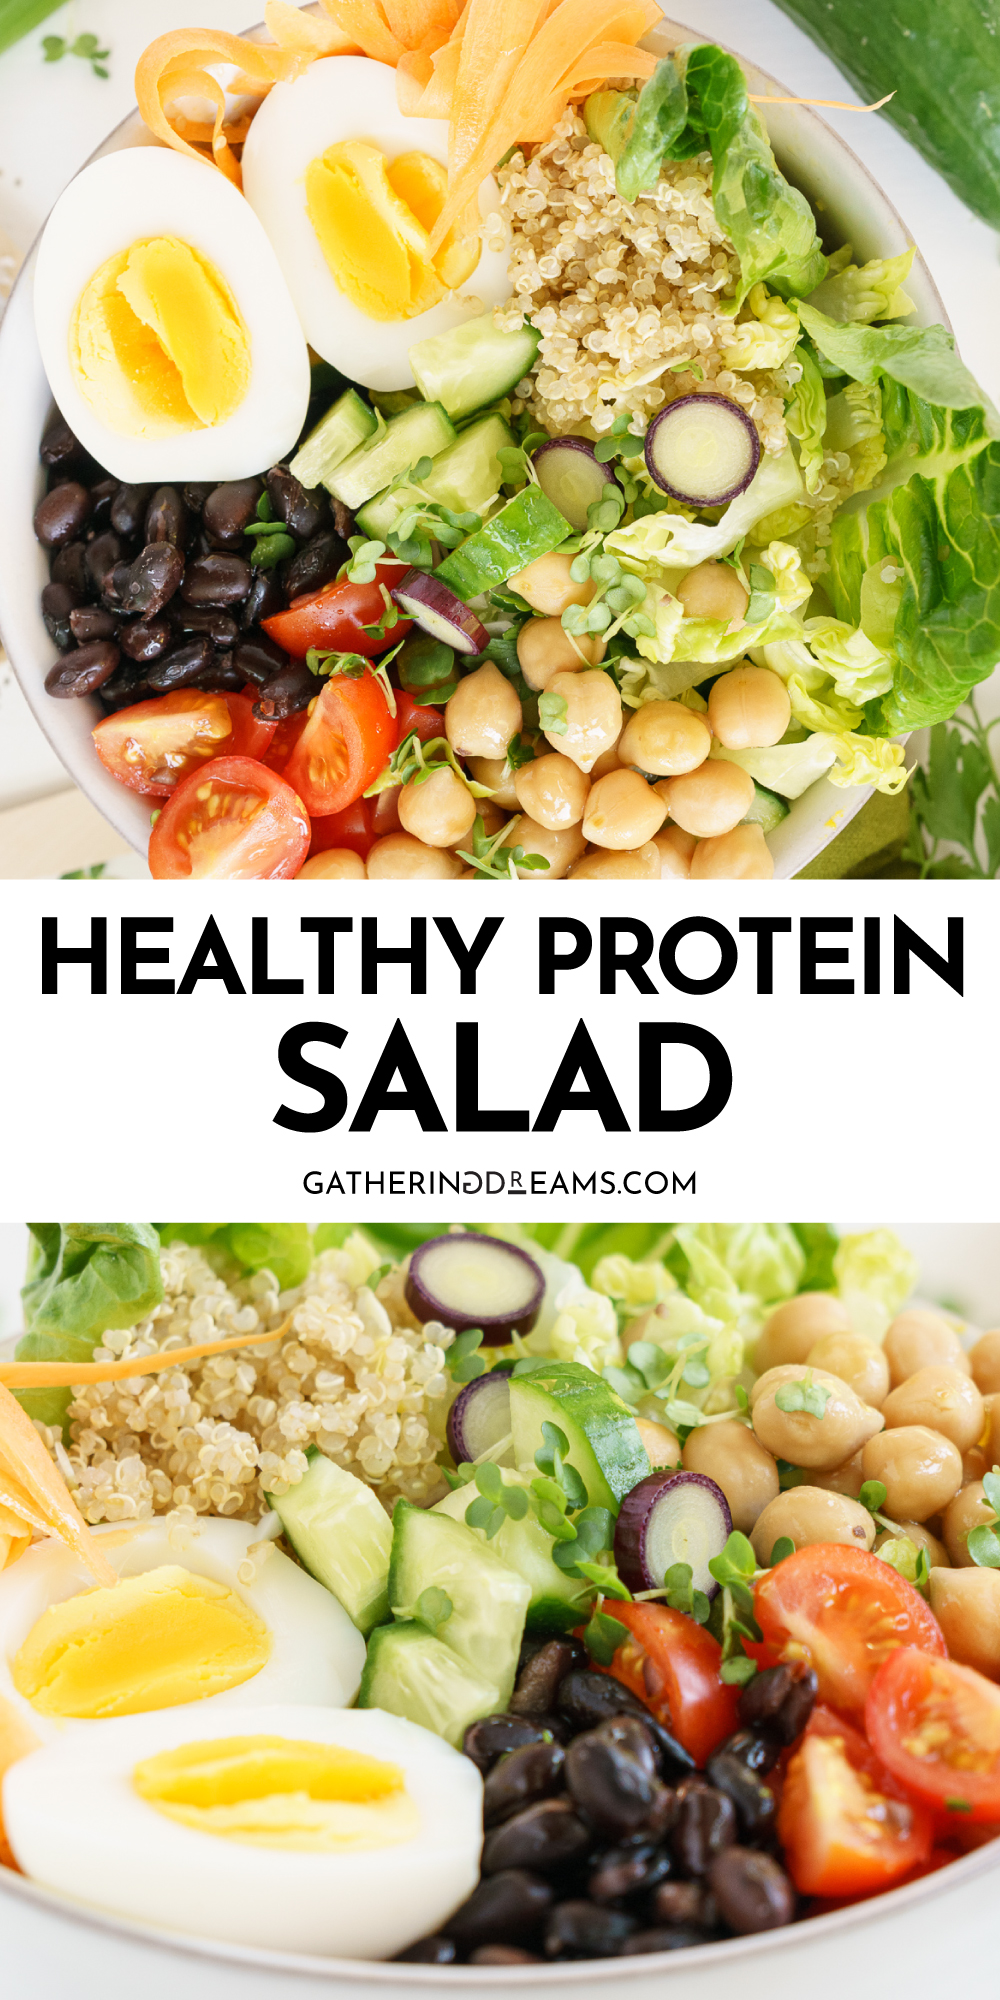 Protein Salad (Meal Prep) - Gathering Dreams